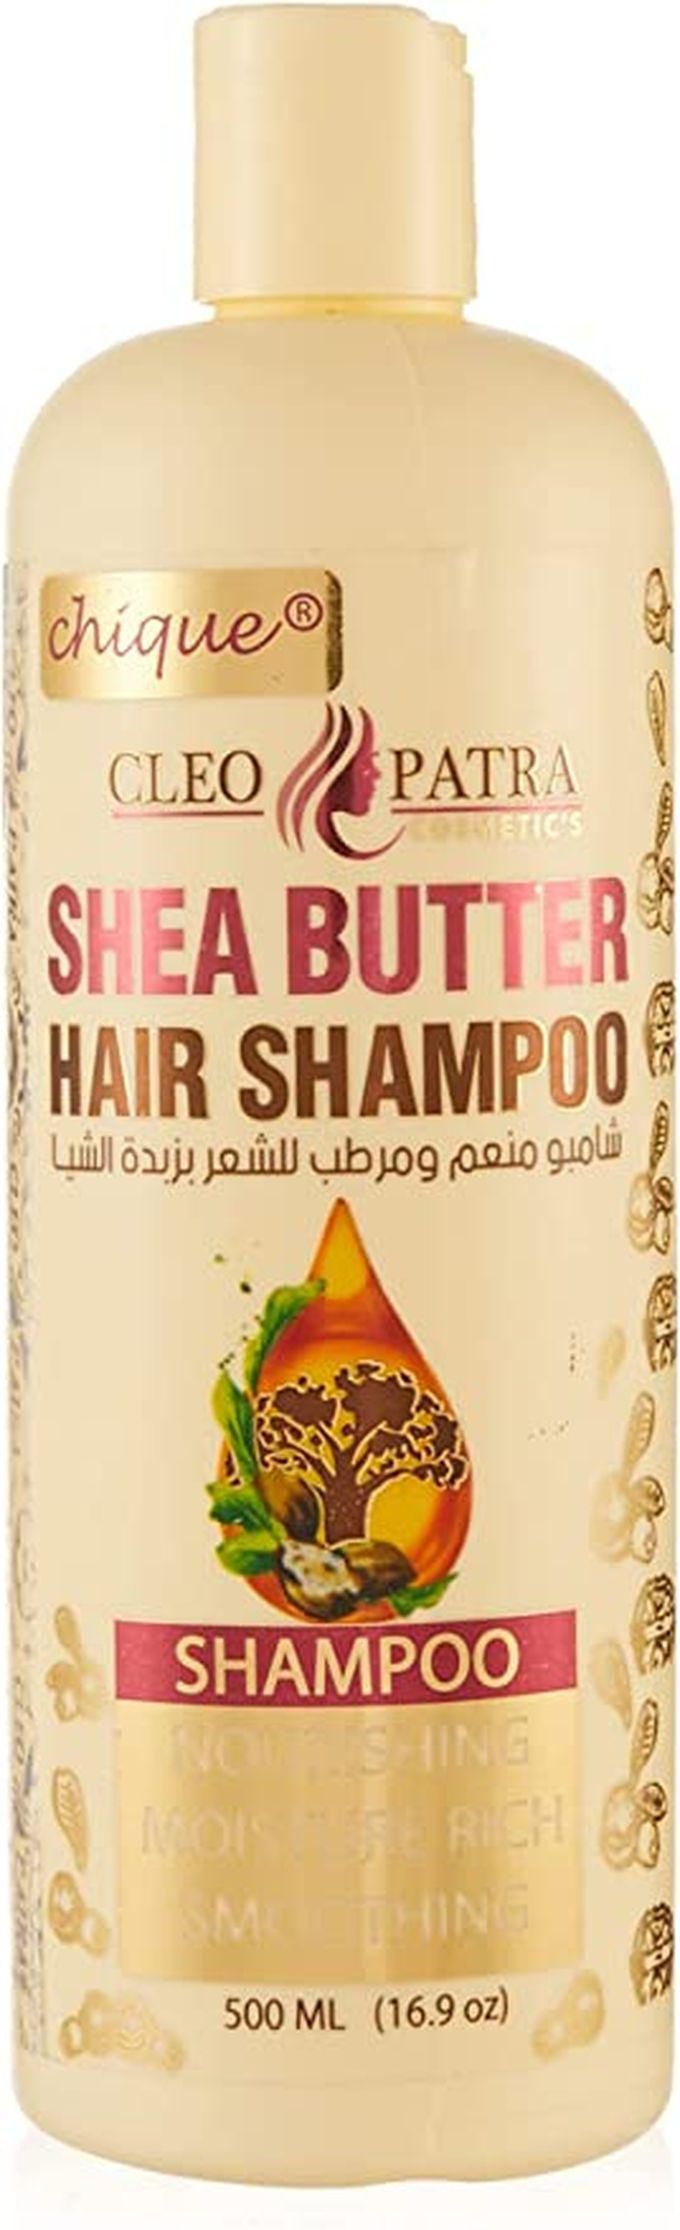 Cleopatra Shea Butter Hair Shampoo Moisturizing